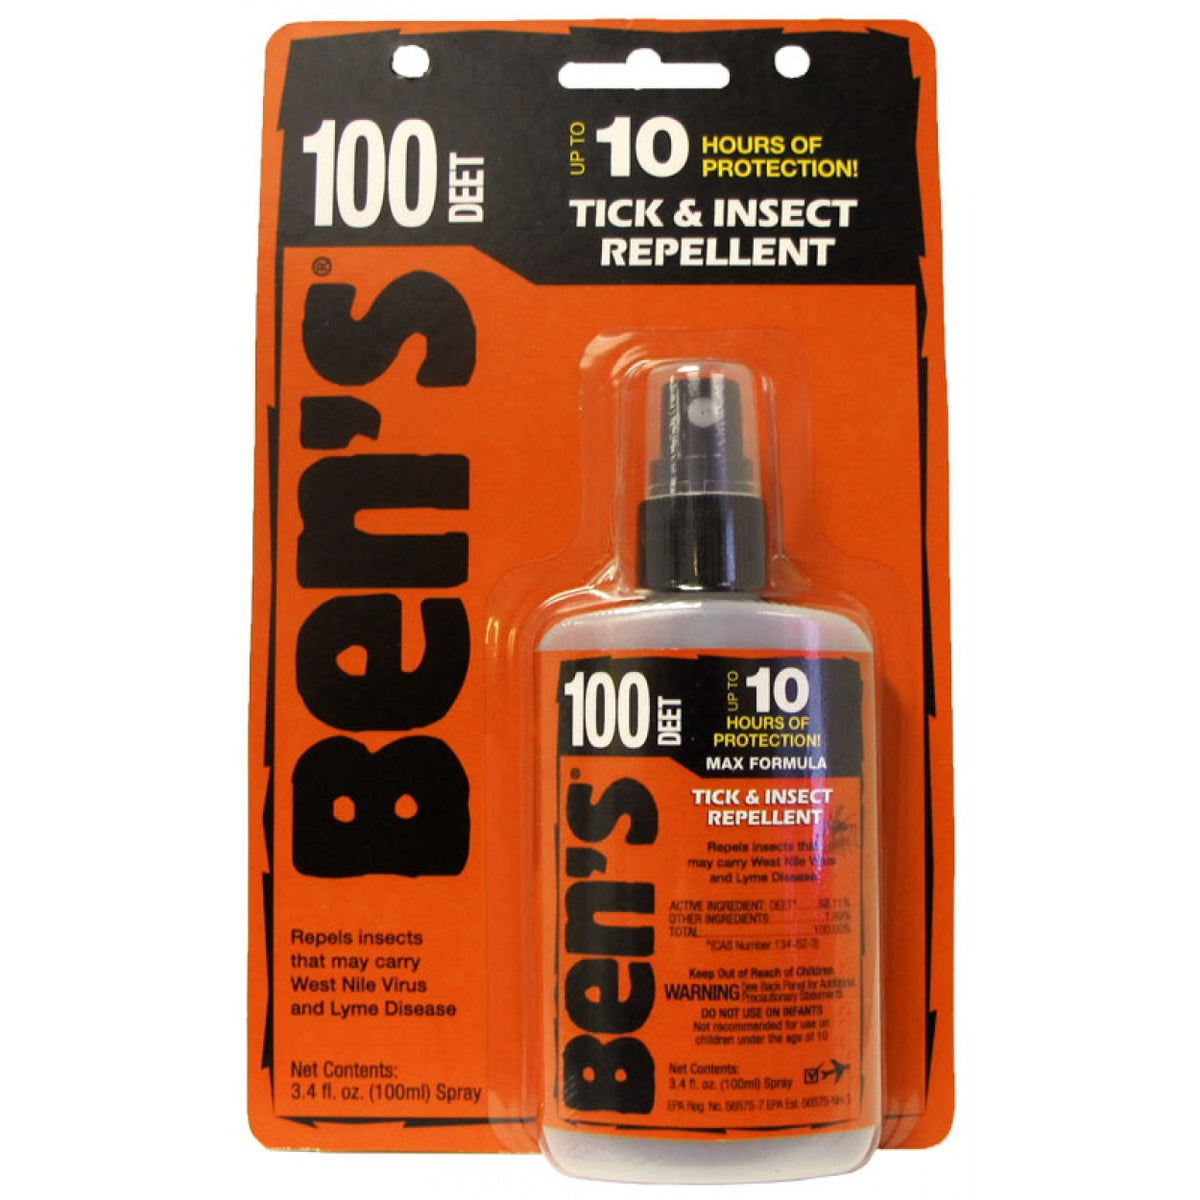 Ben's 100 MAX Tick & Insect Repellent